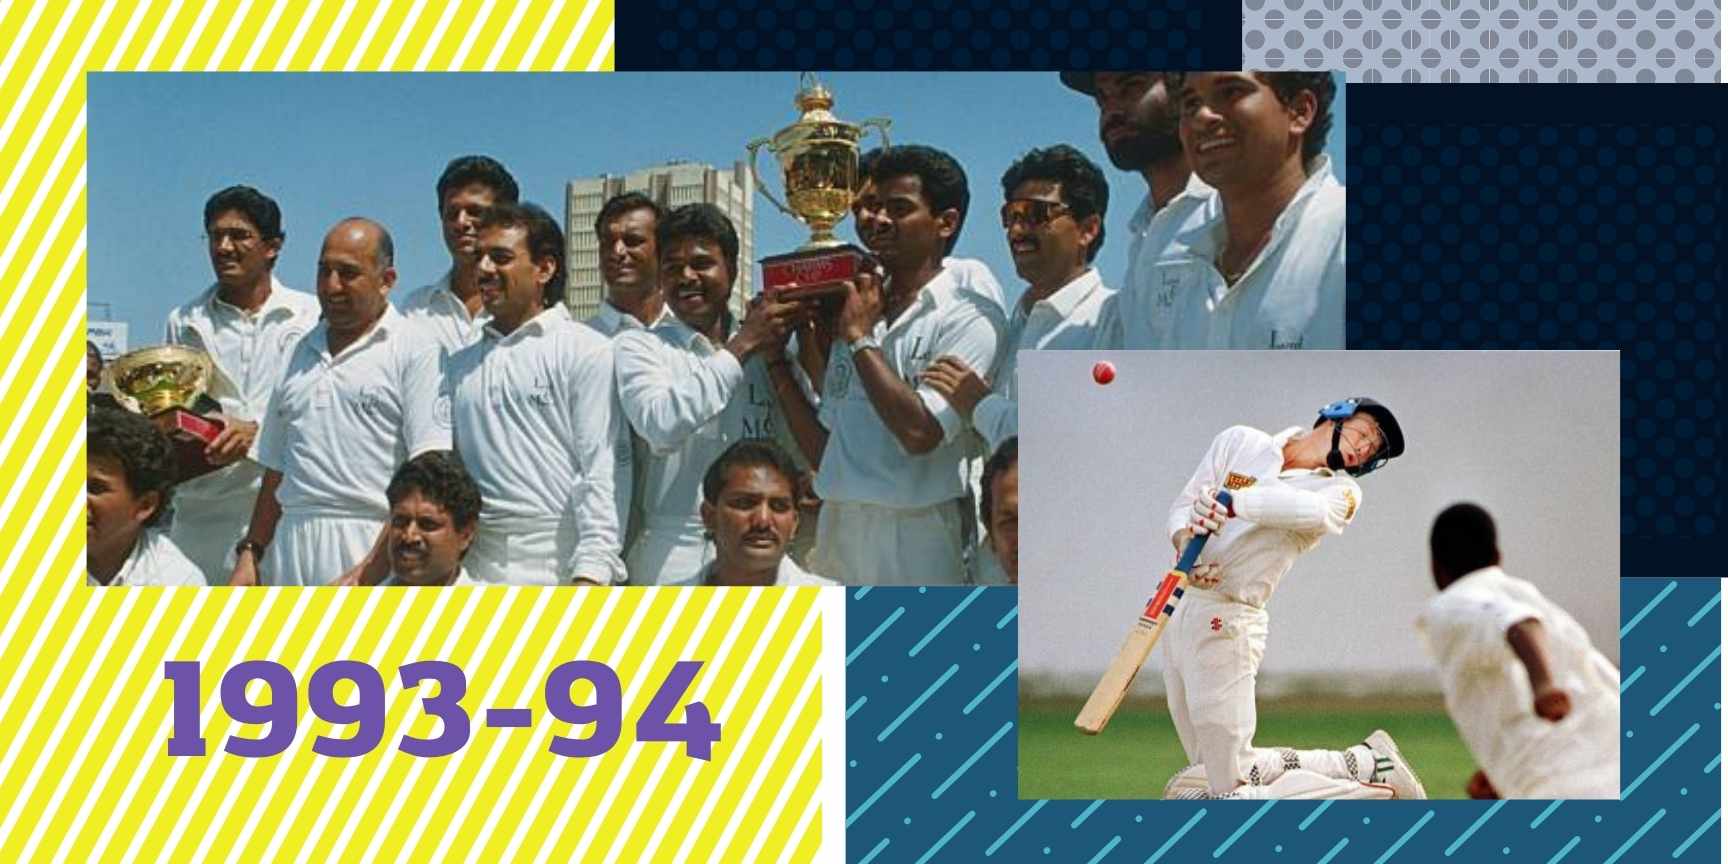 1993-94 world of cricket